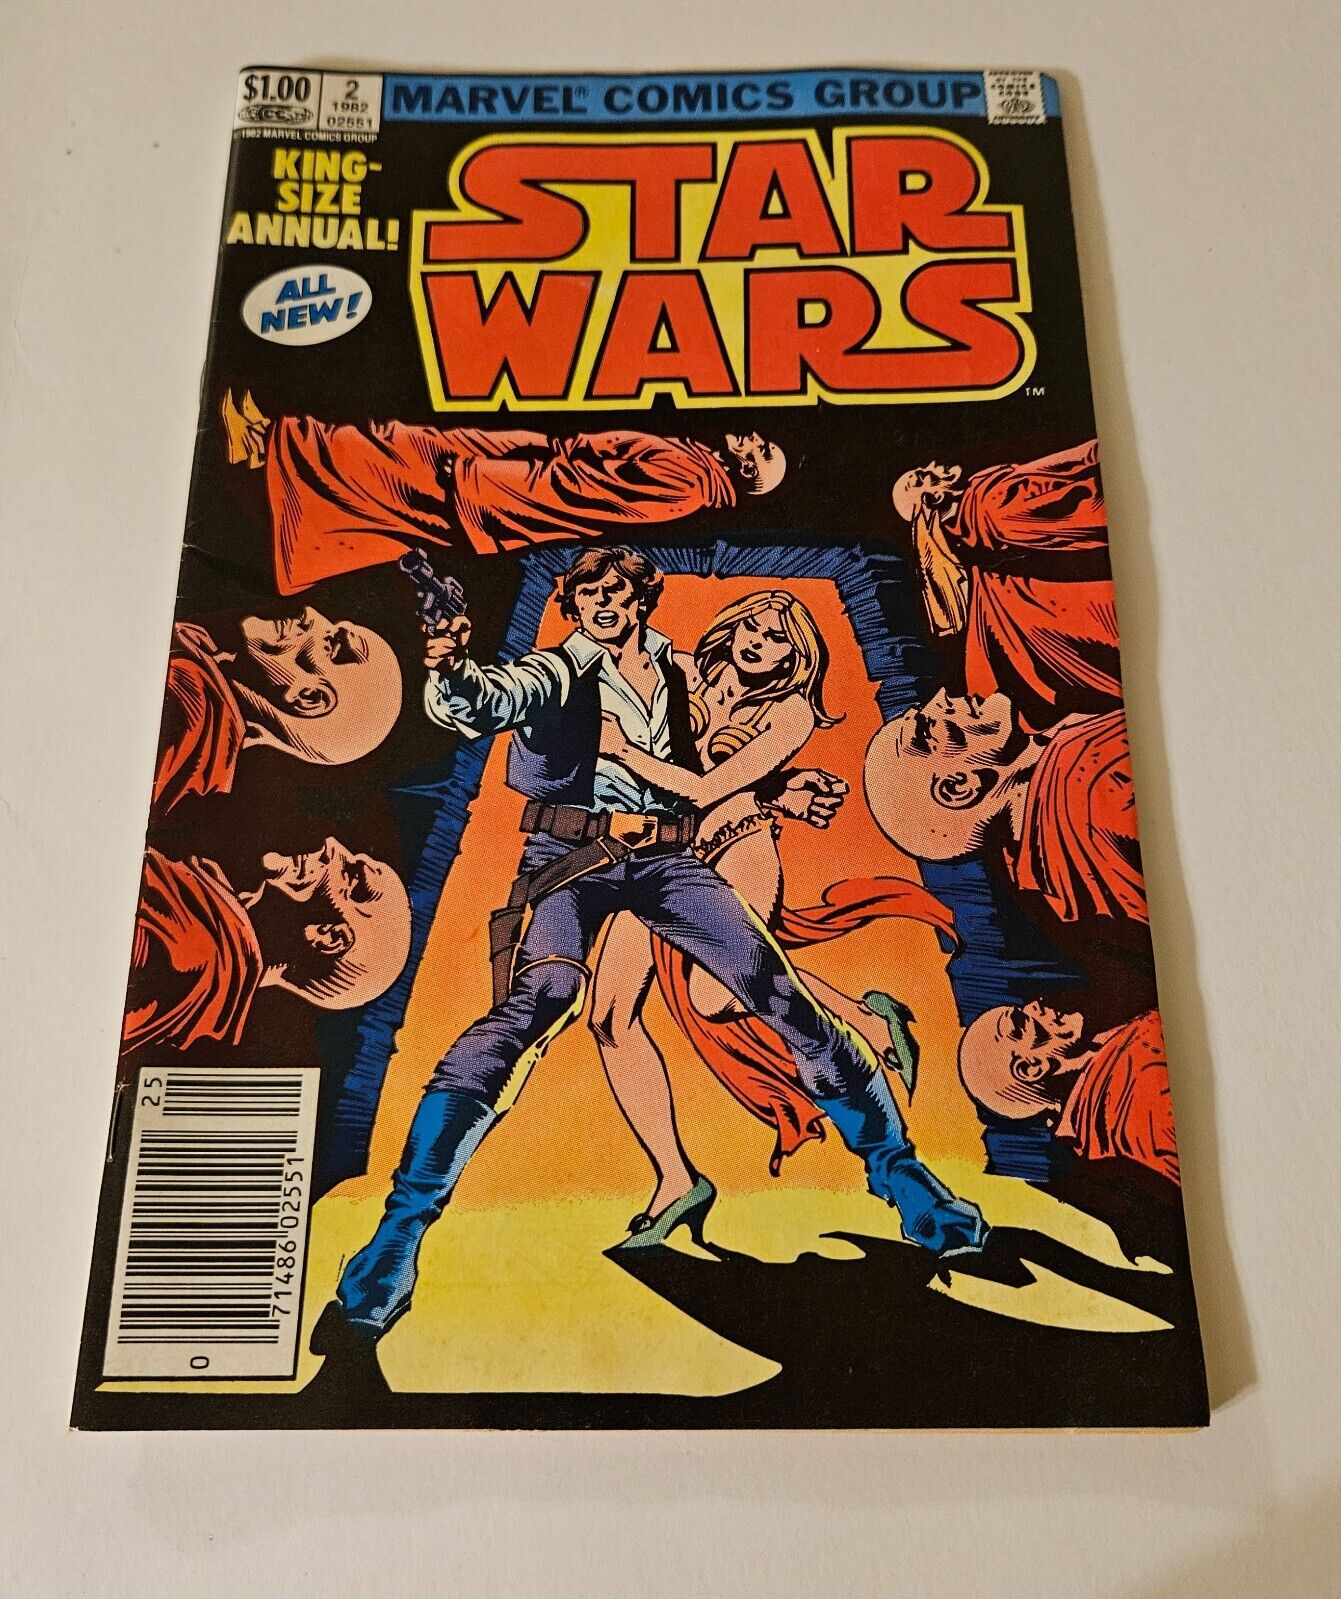 Vintage 1982 Vol.1 No.2 Star Wars-King Size Annual Marvel Comics